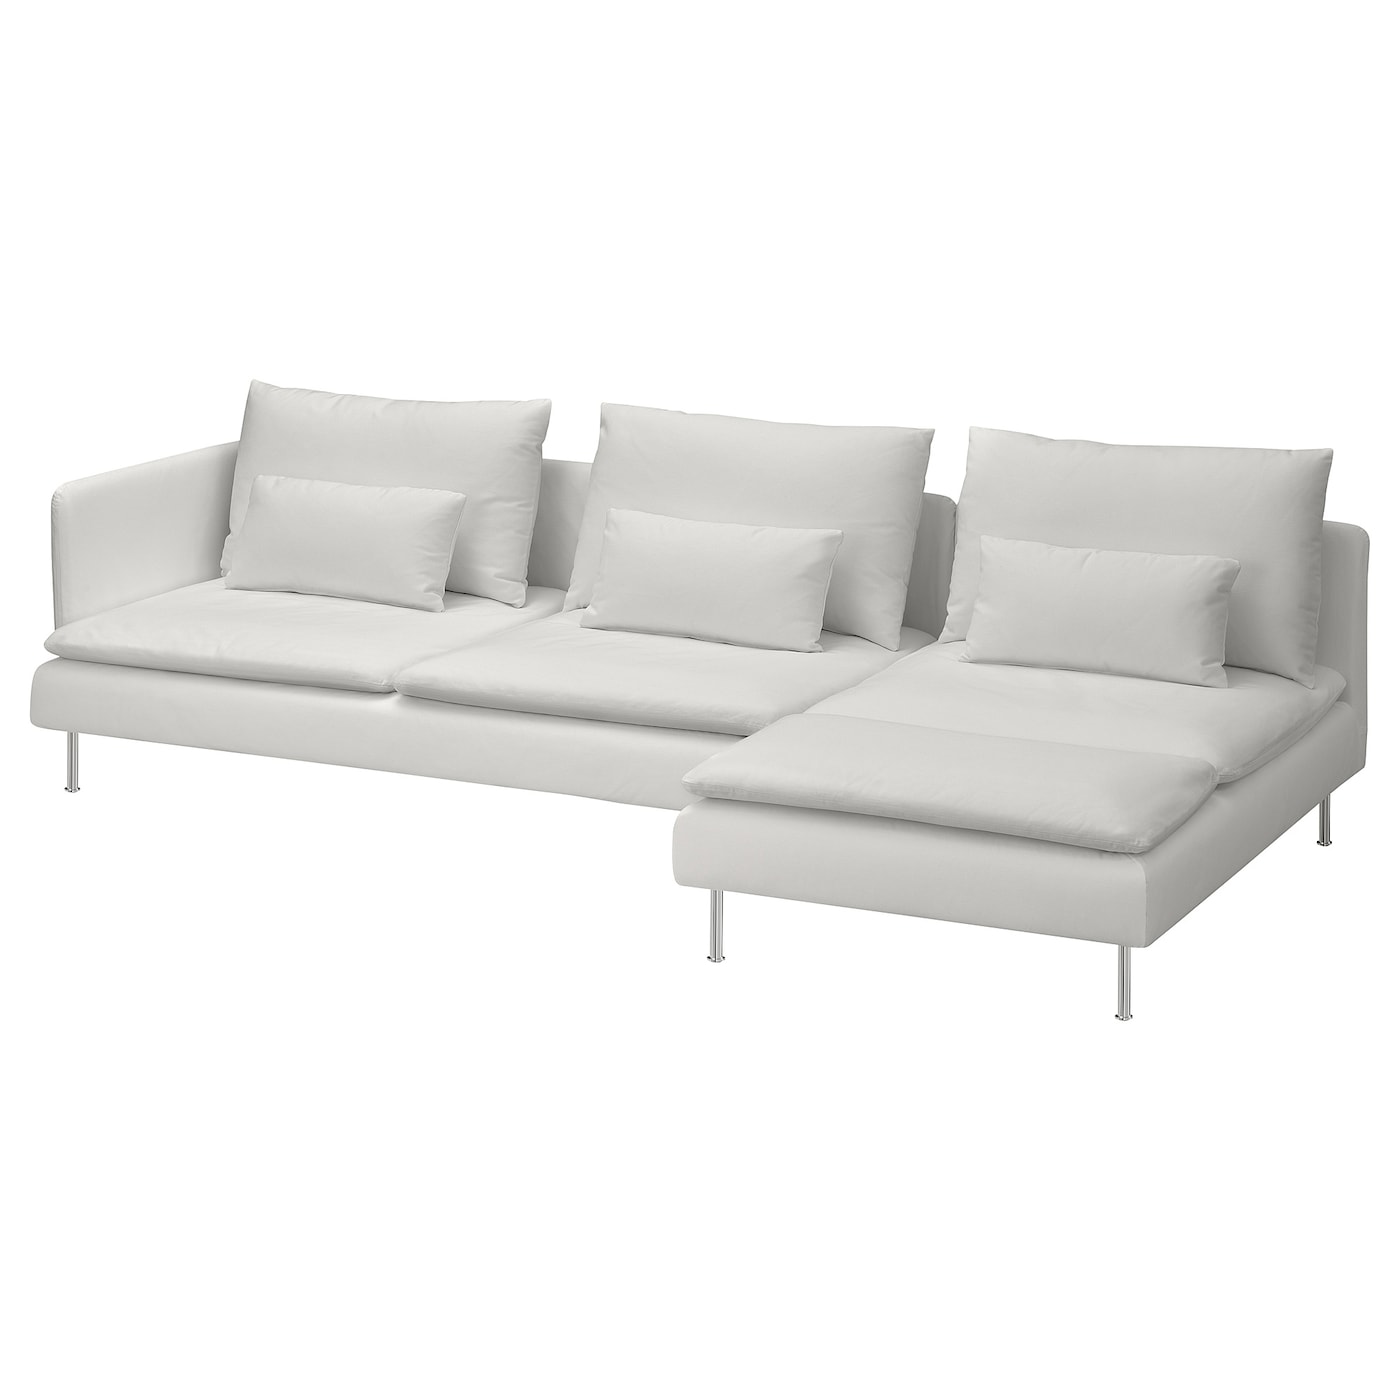 СЁДЕРХАМН 4-местный диван+диван, створка Блекинге/белый SODERHAMN IKEA диван раскладной конфетти